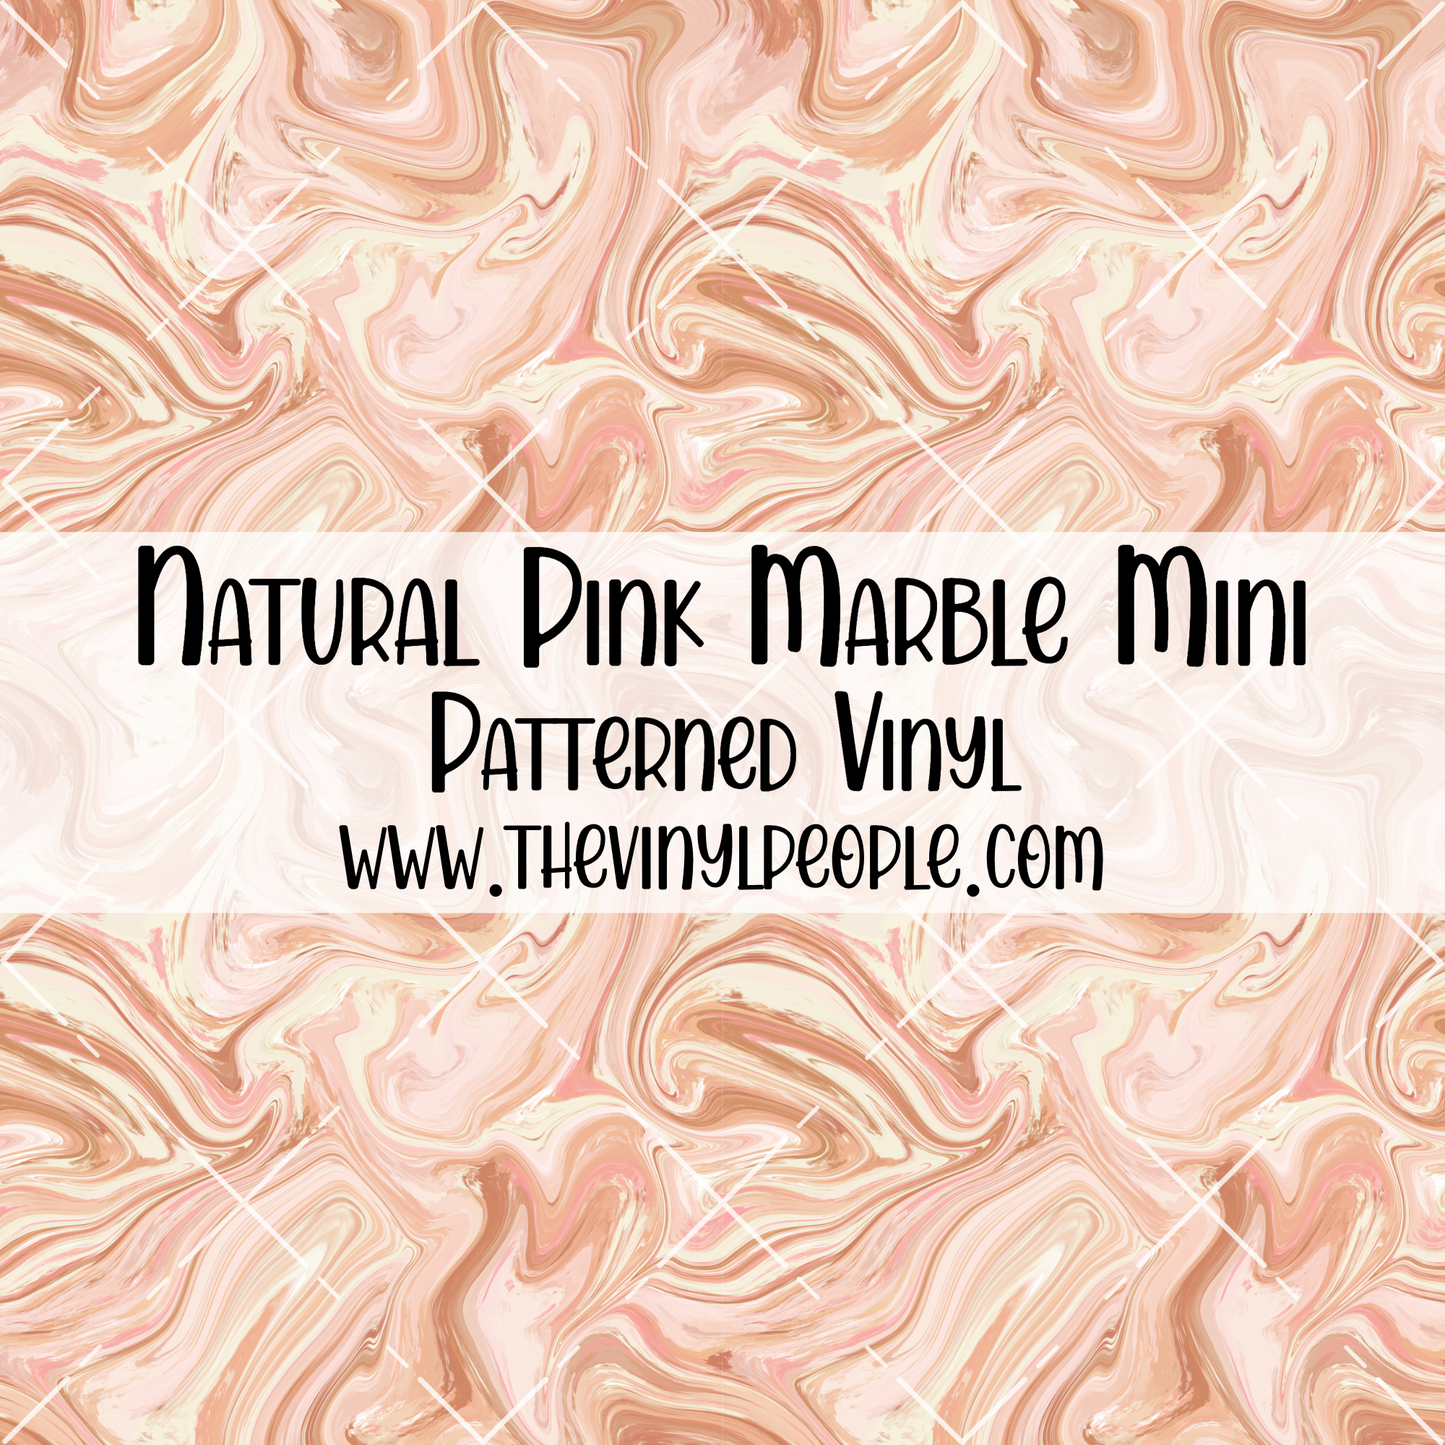 Natural Pink Marble Patterned Vinyl